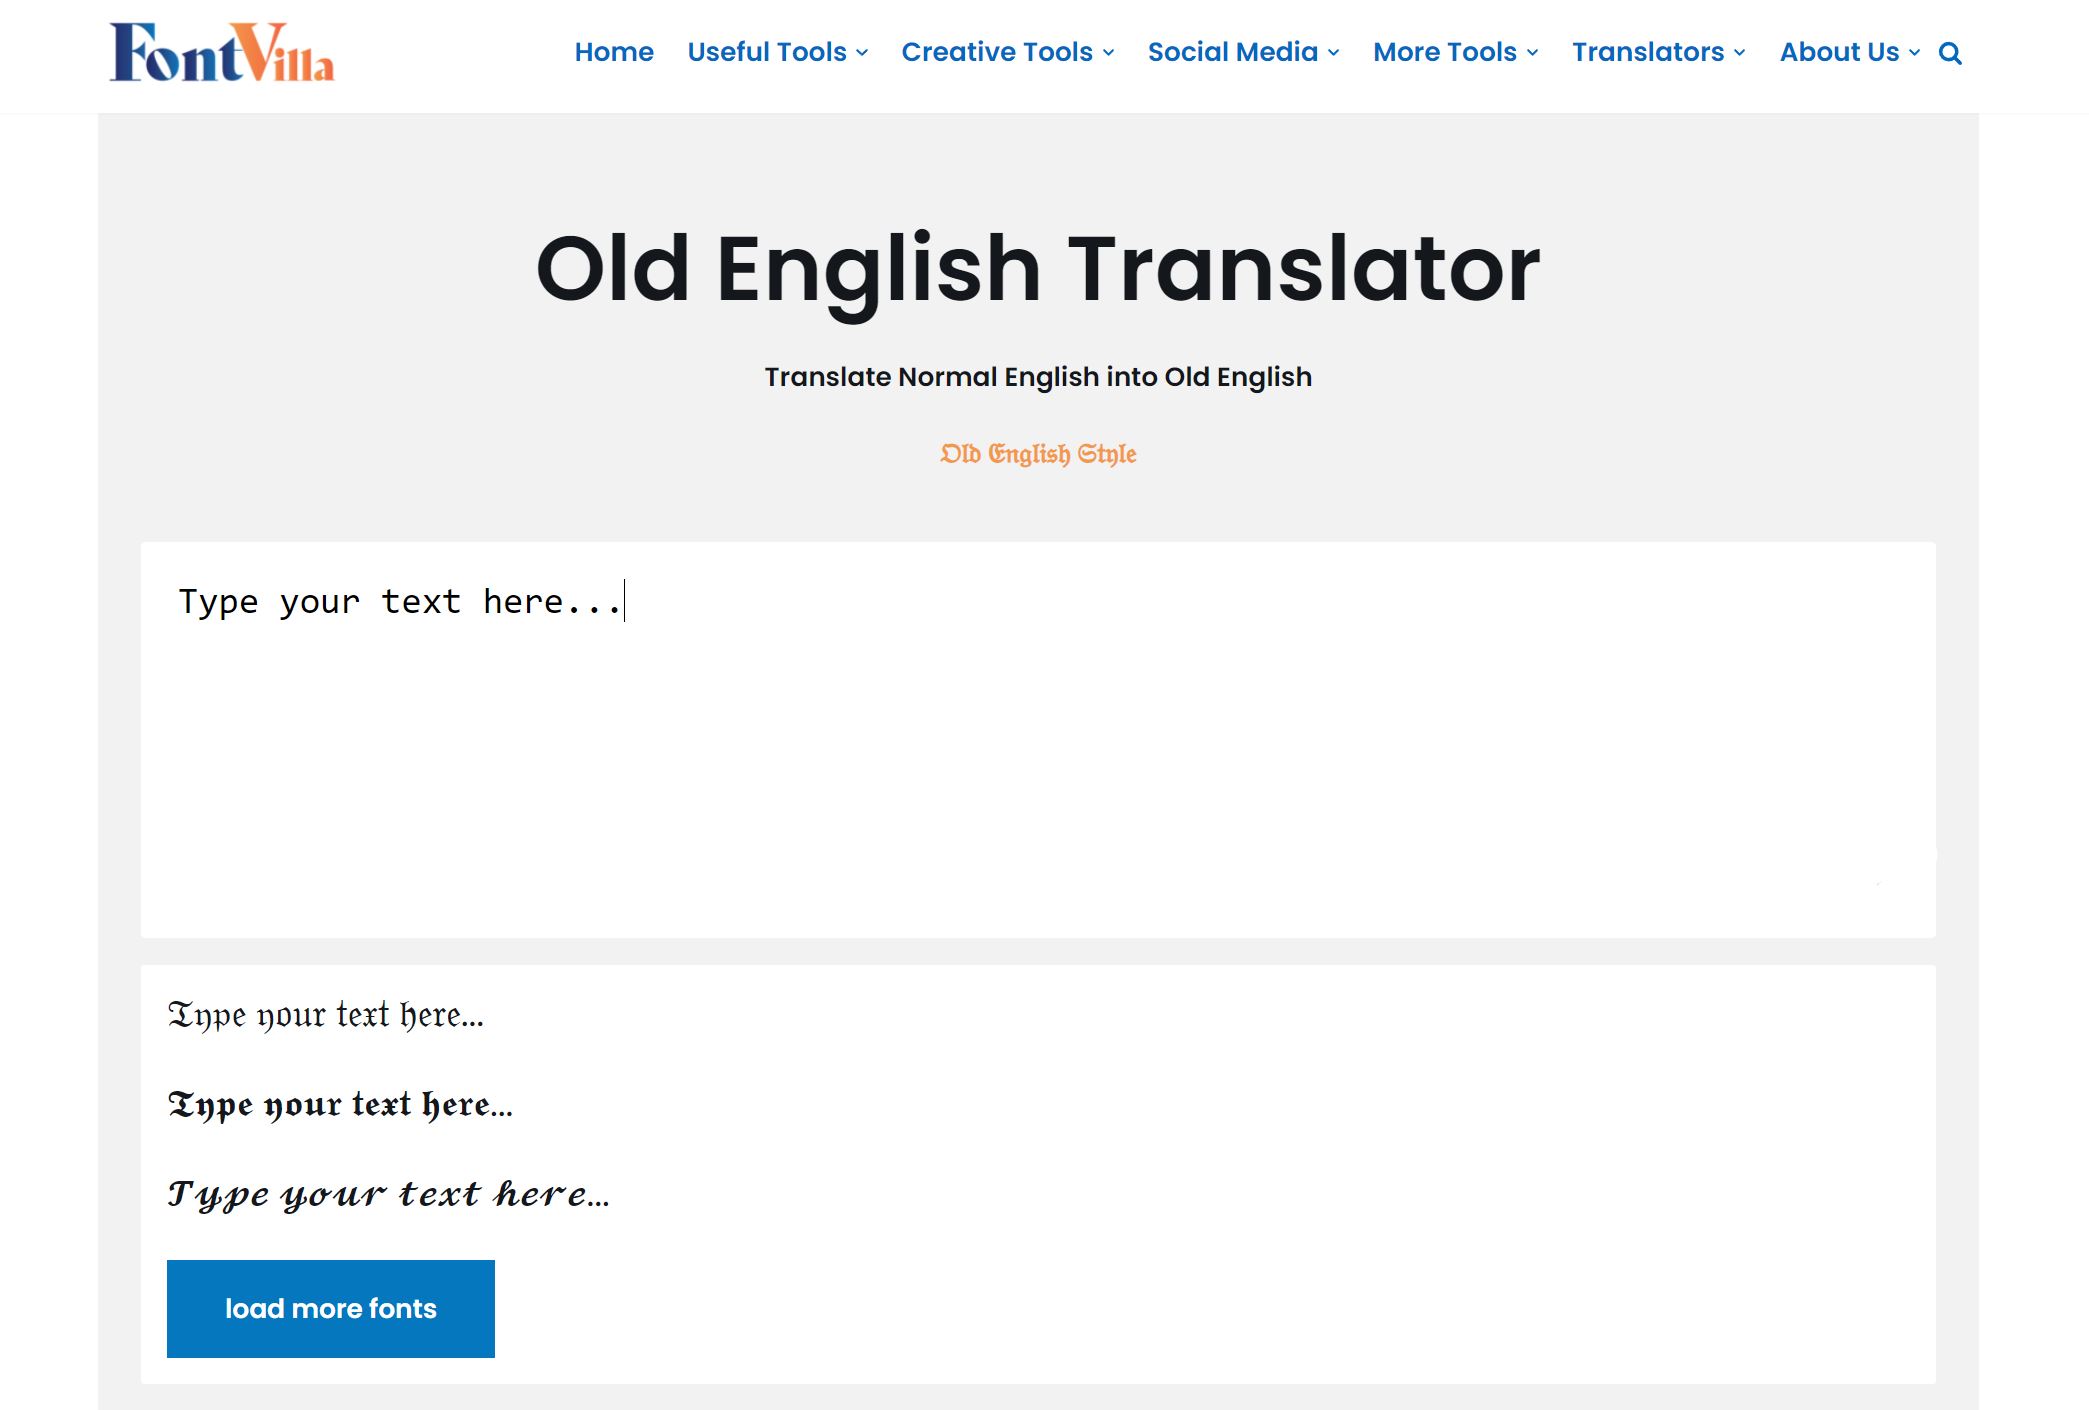 Old English Translator